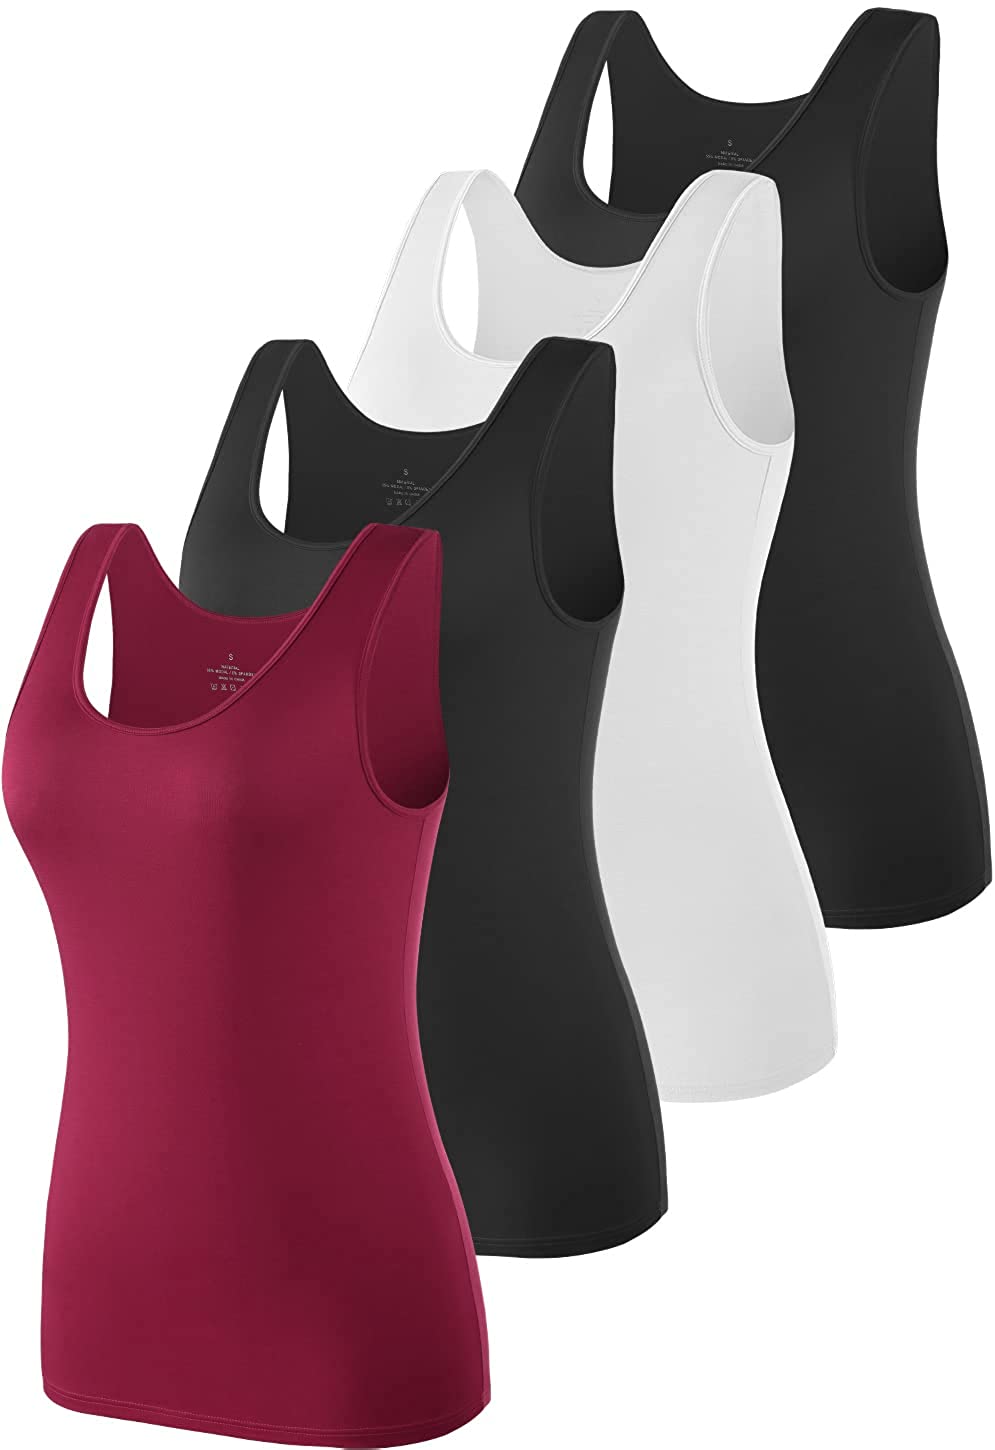 AMVELOP Basic Tank Top for Women Undershirts Sleeveless Layering Tank Top  2-4 Pack Black Gray White Pink S at  Women's Clothing store